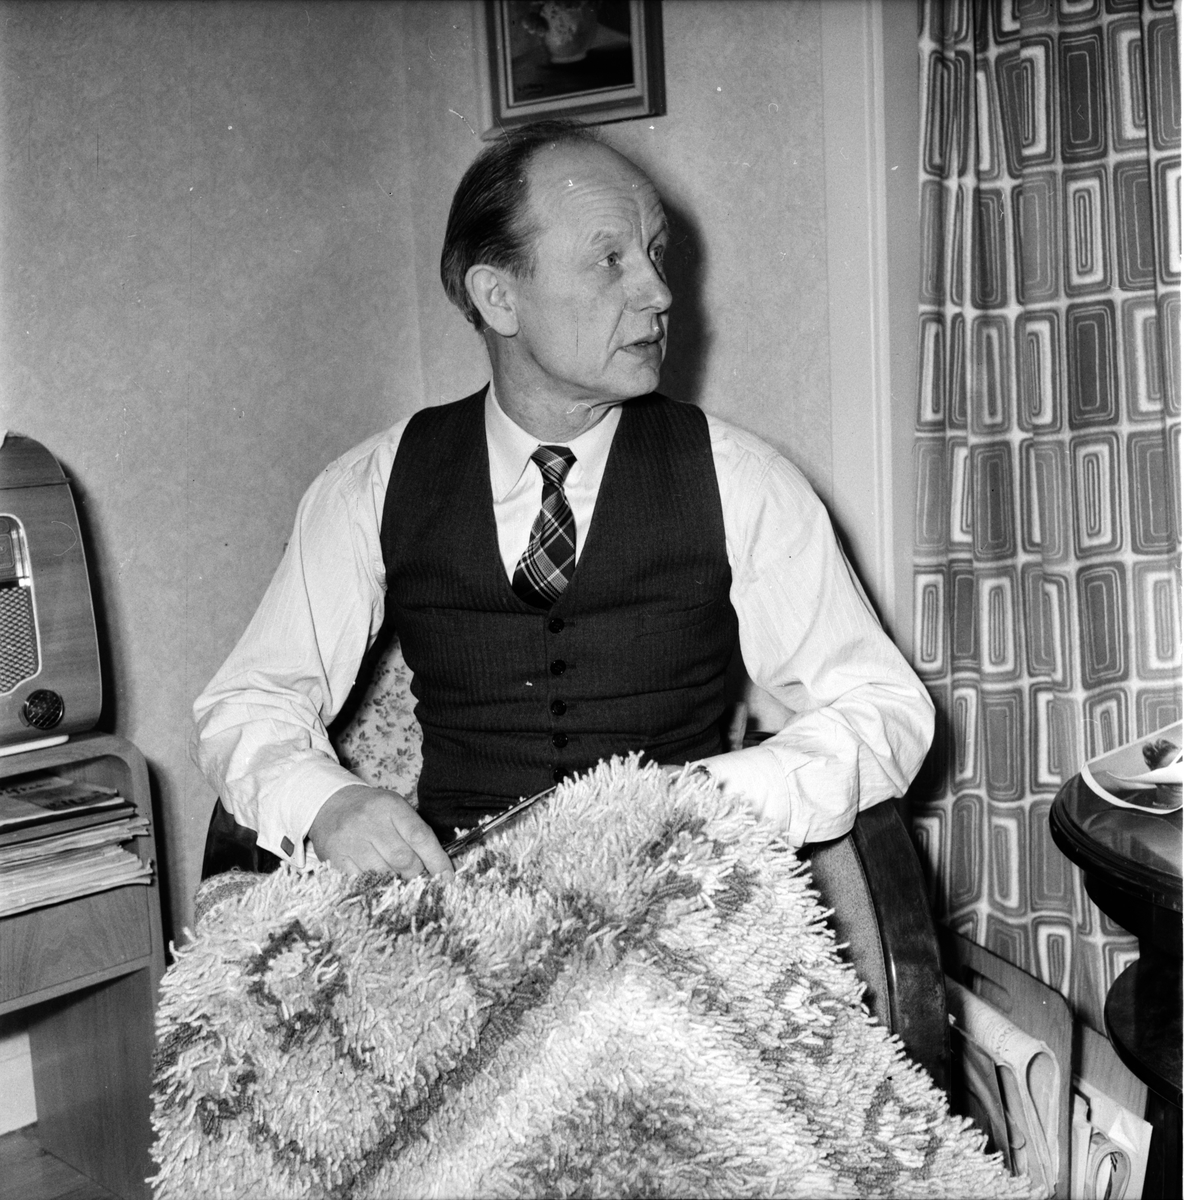 Växbo,
Billov Erik,Ryaslöjdare,
Febr 1956